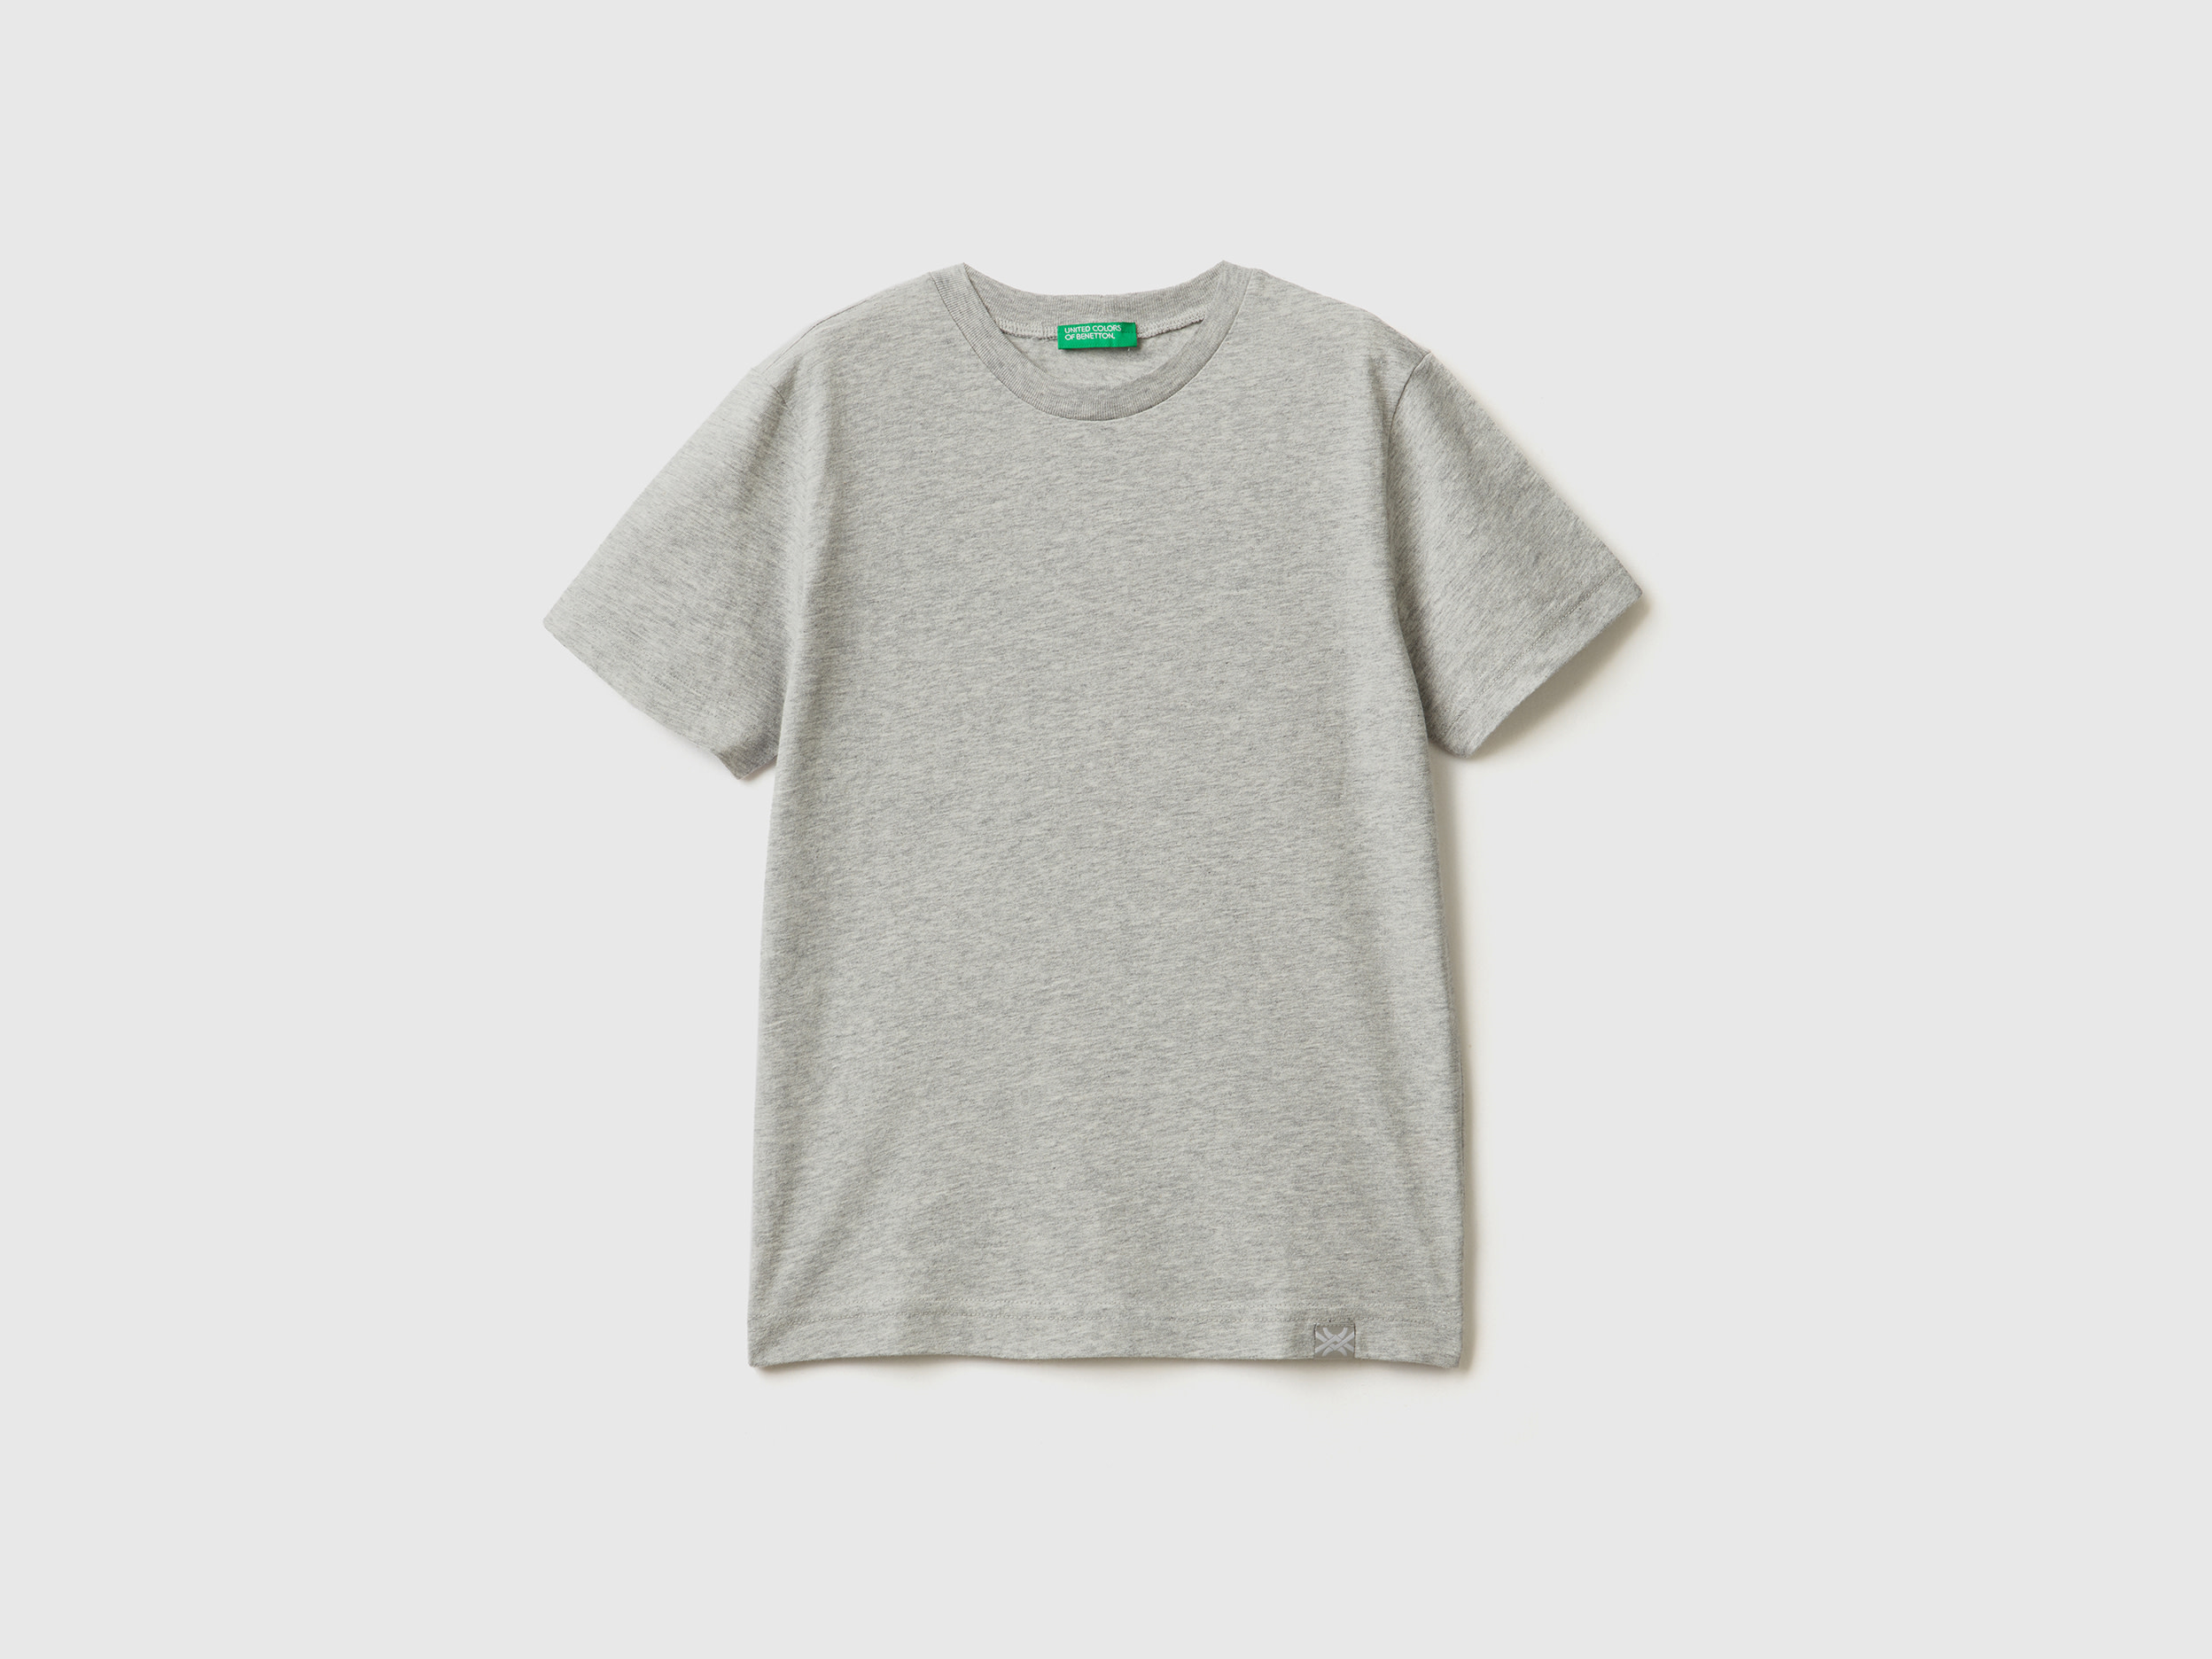 Image of Benetton, Organic Cotton T-shirt, size S, Light Gray, Kids